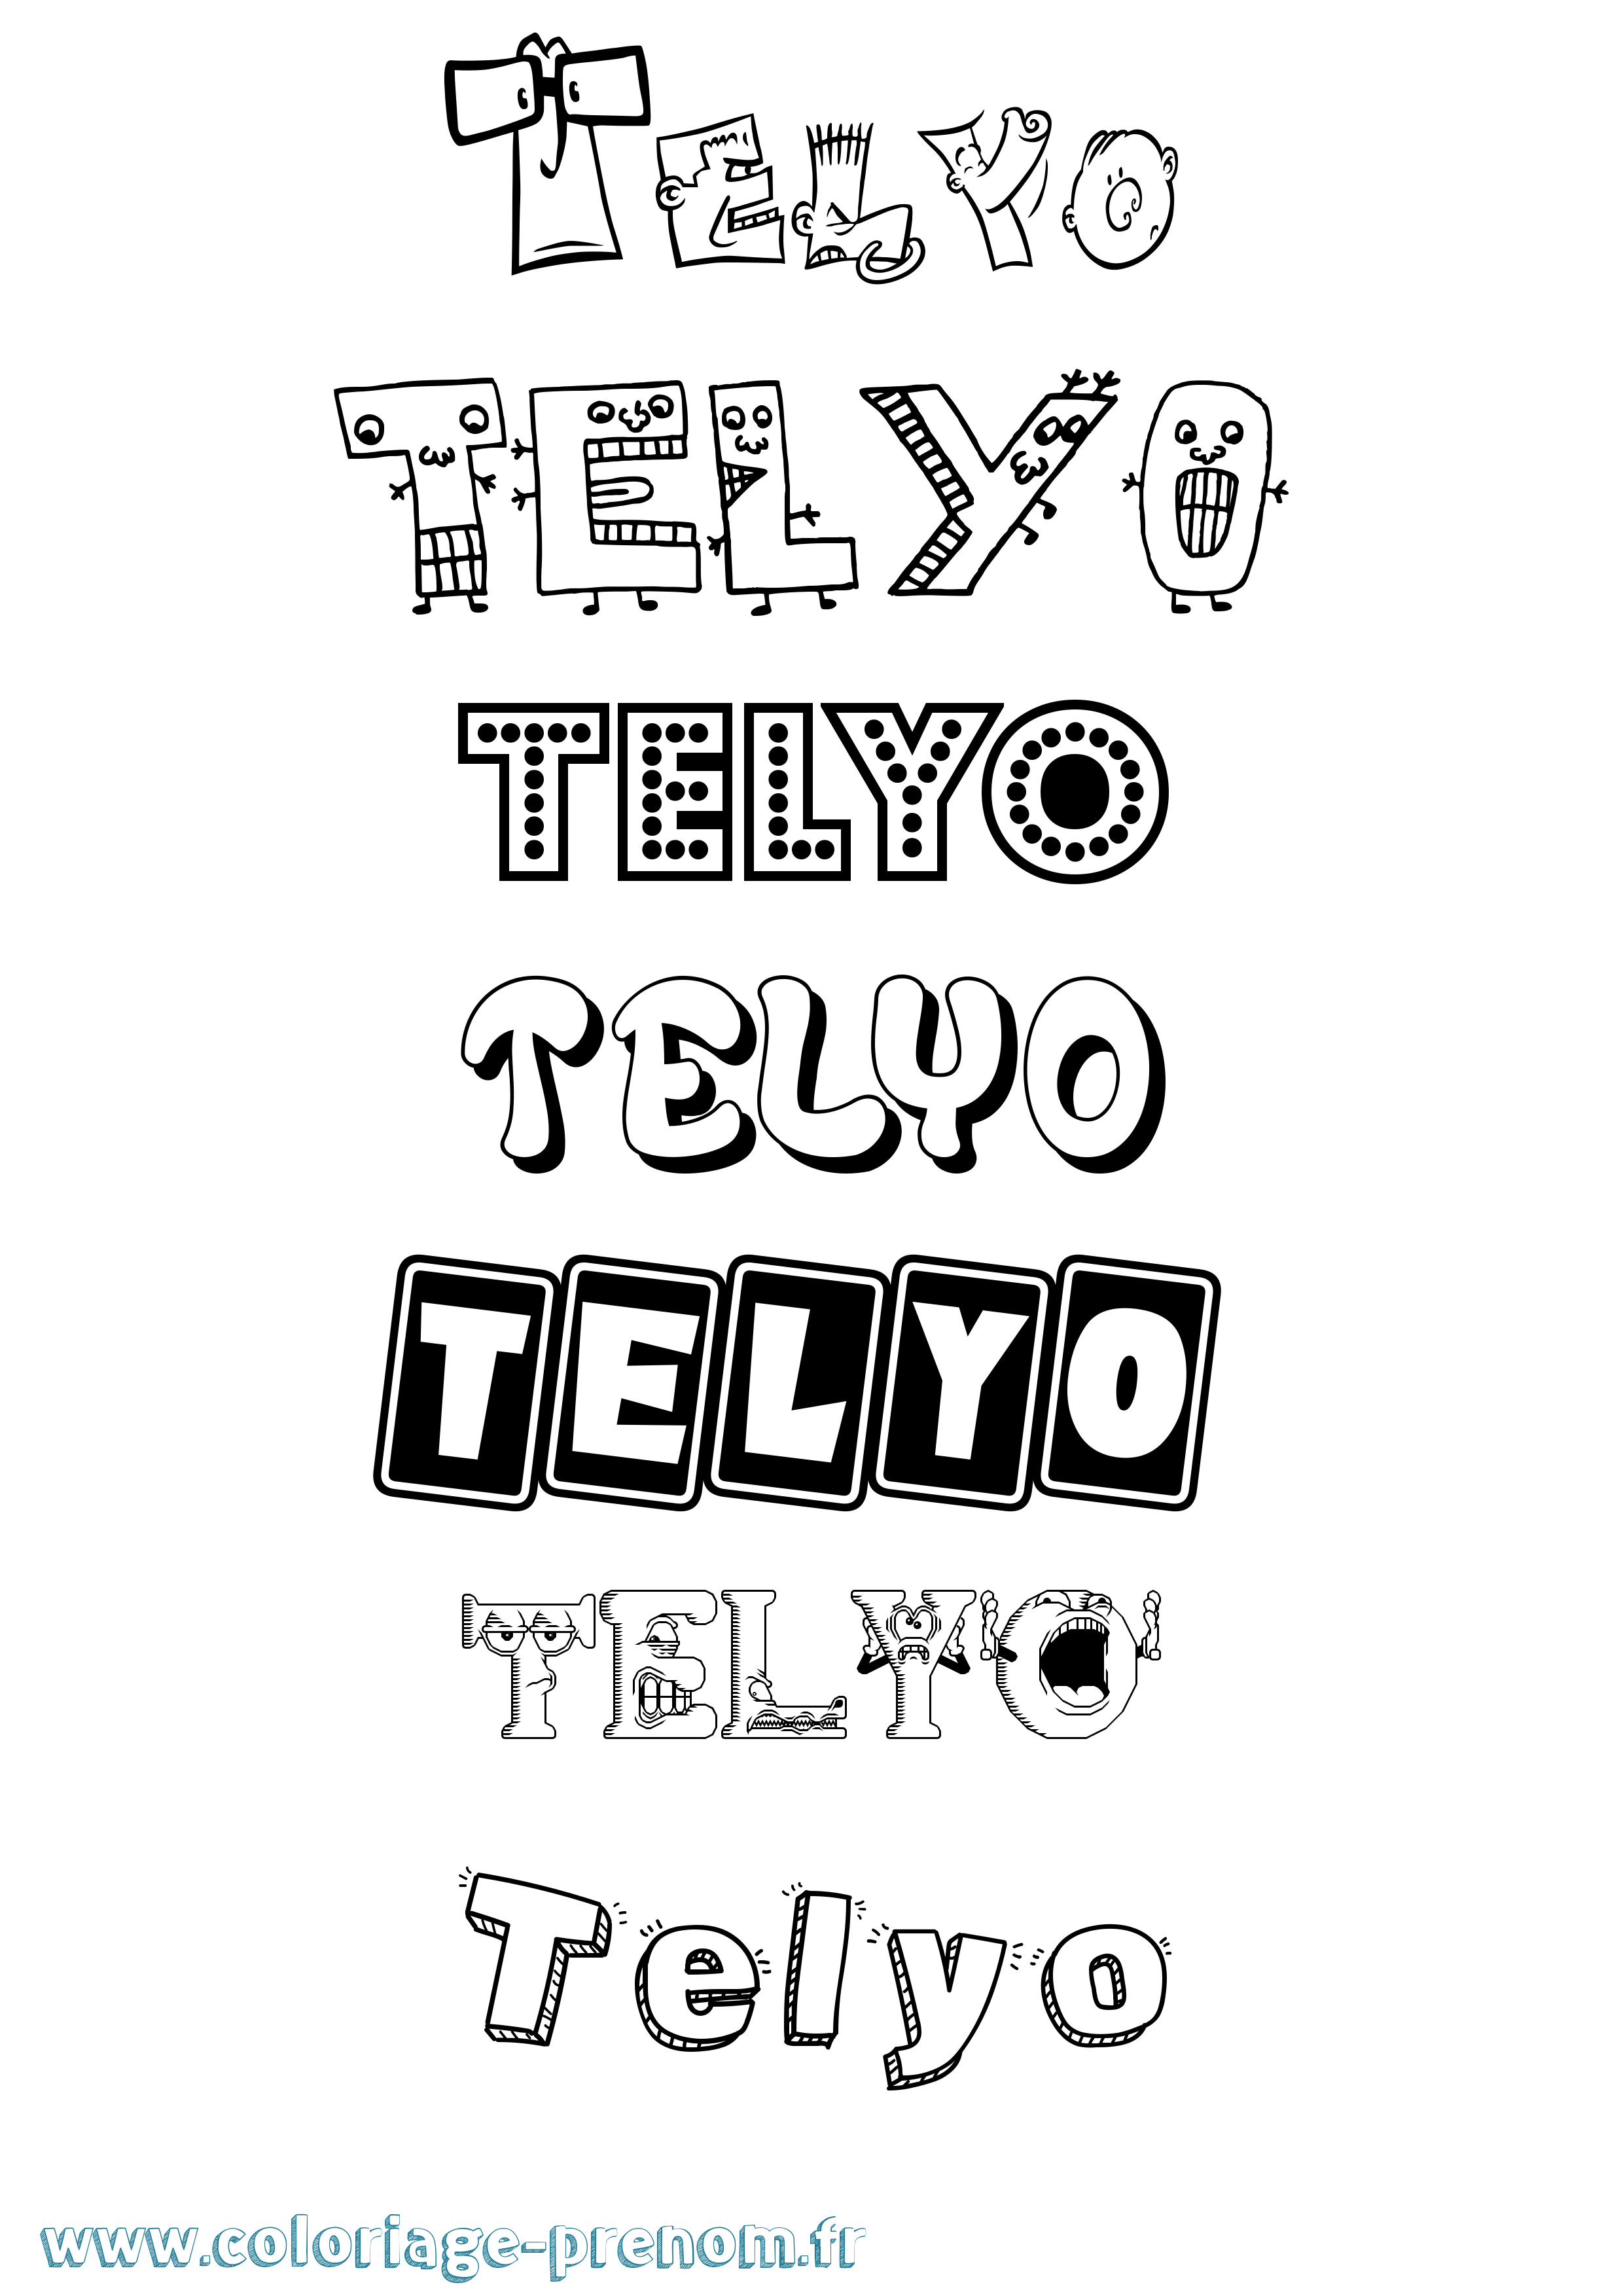 Coloriage prénom Telyo Fun